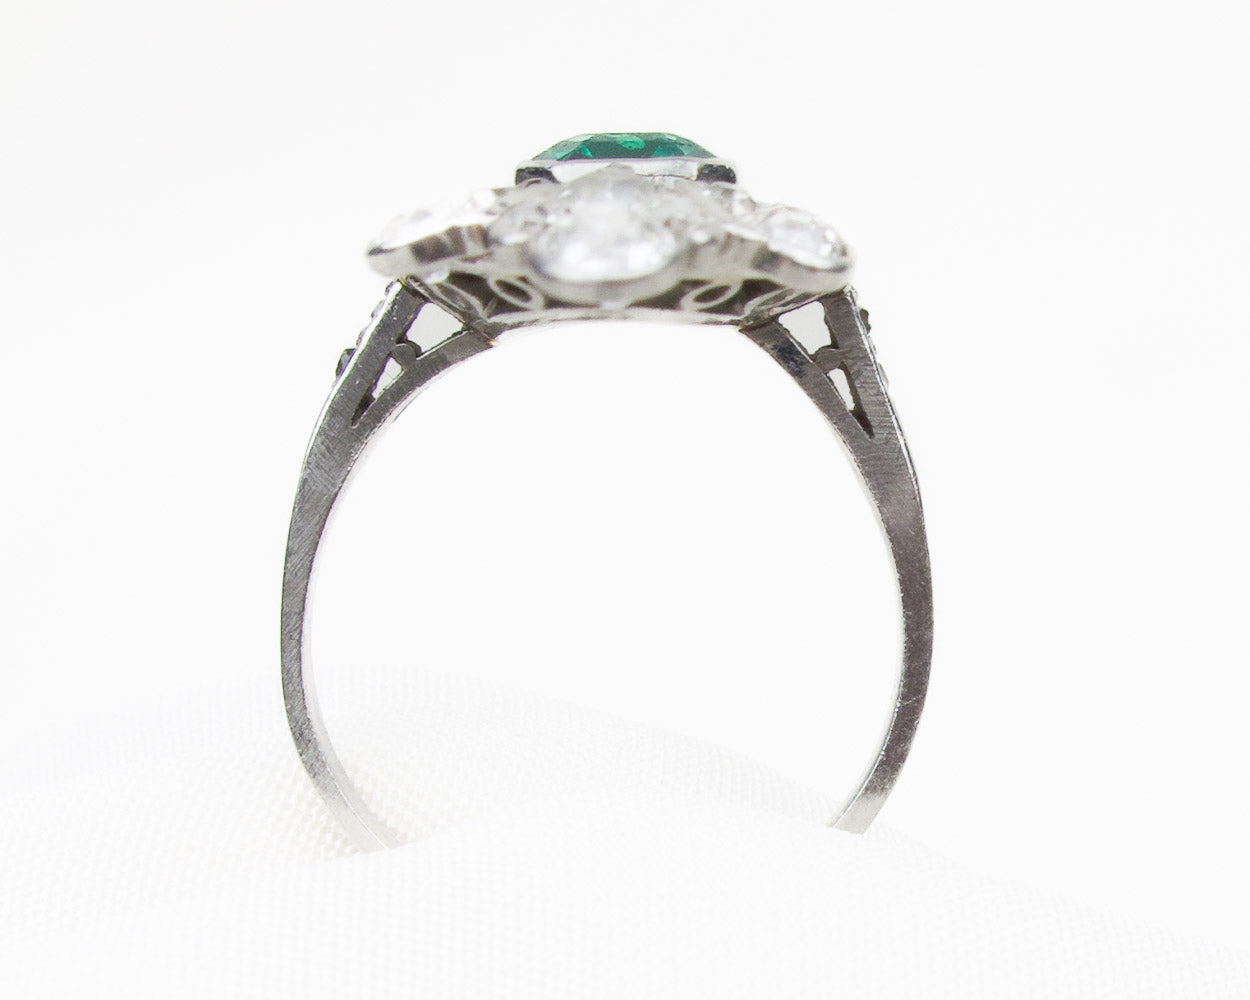 Edwardian French Emerald & Diamond Ring